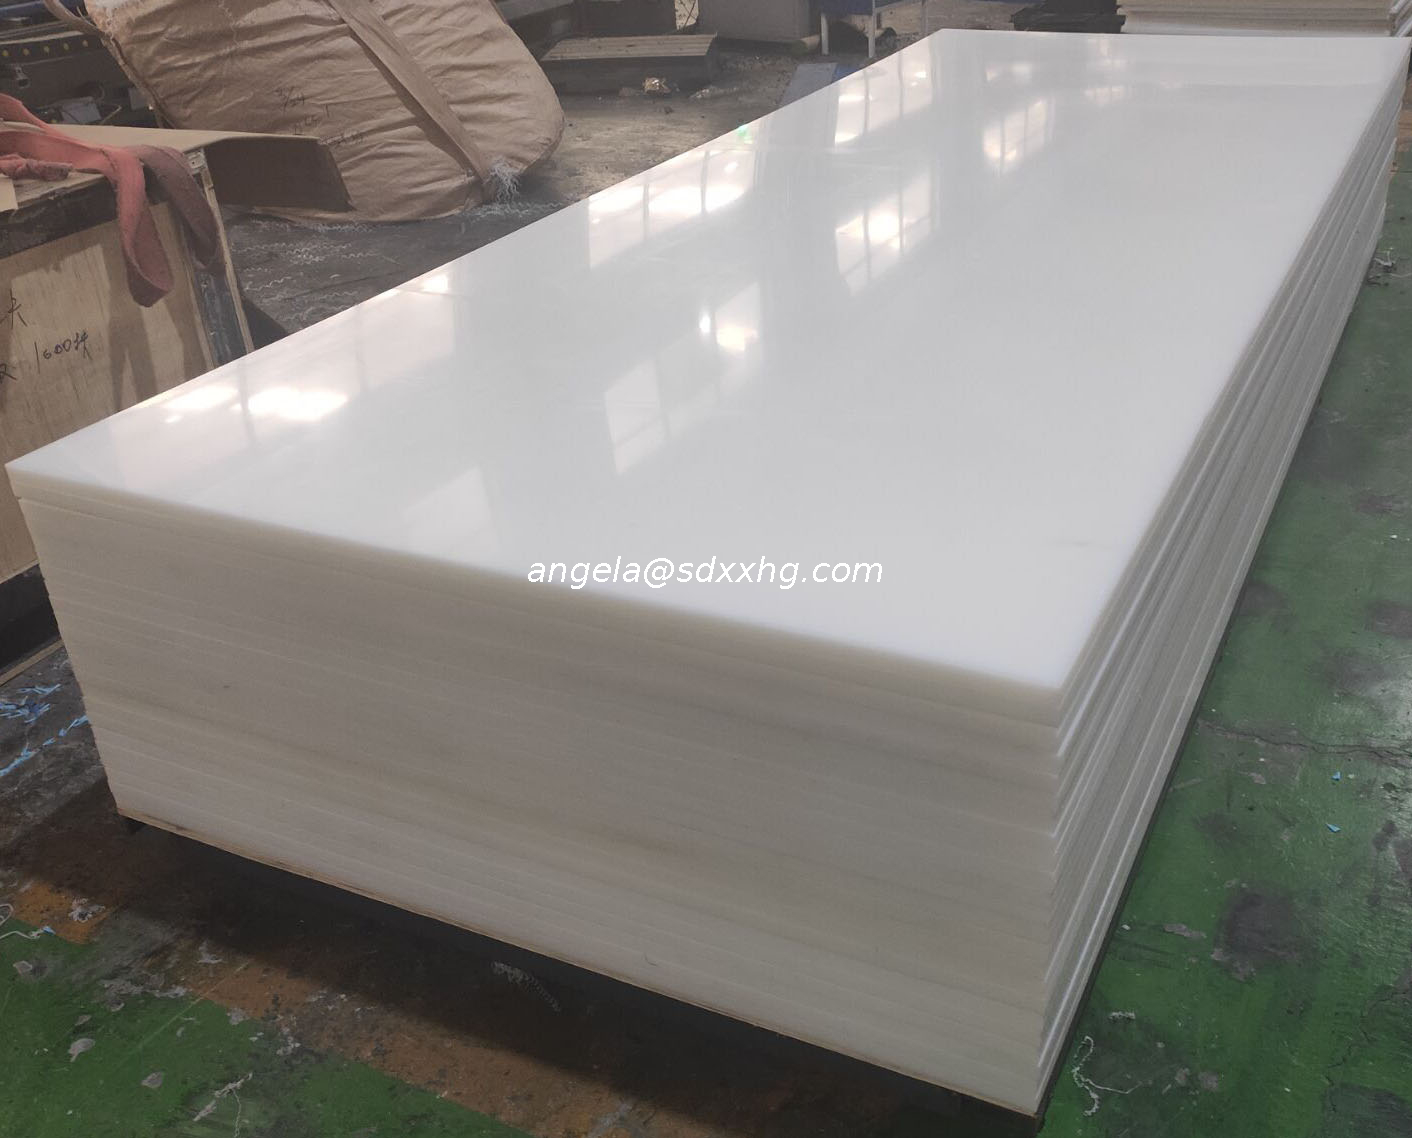 HDPE High Density Polyethylene Natural Sheet/black HDPE Board